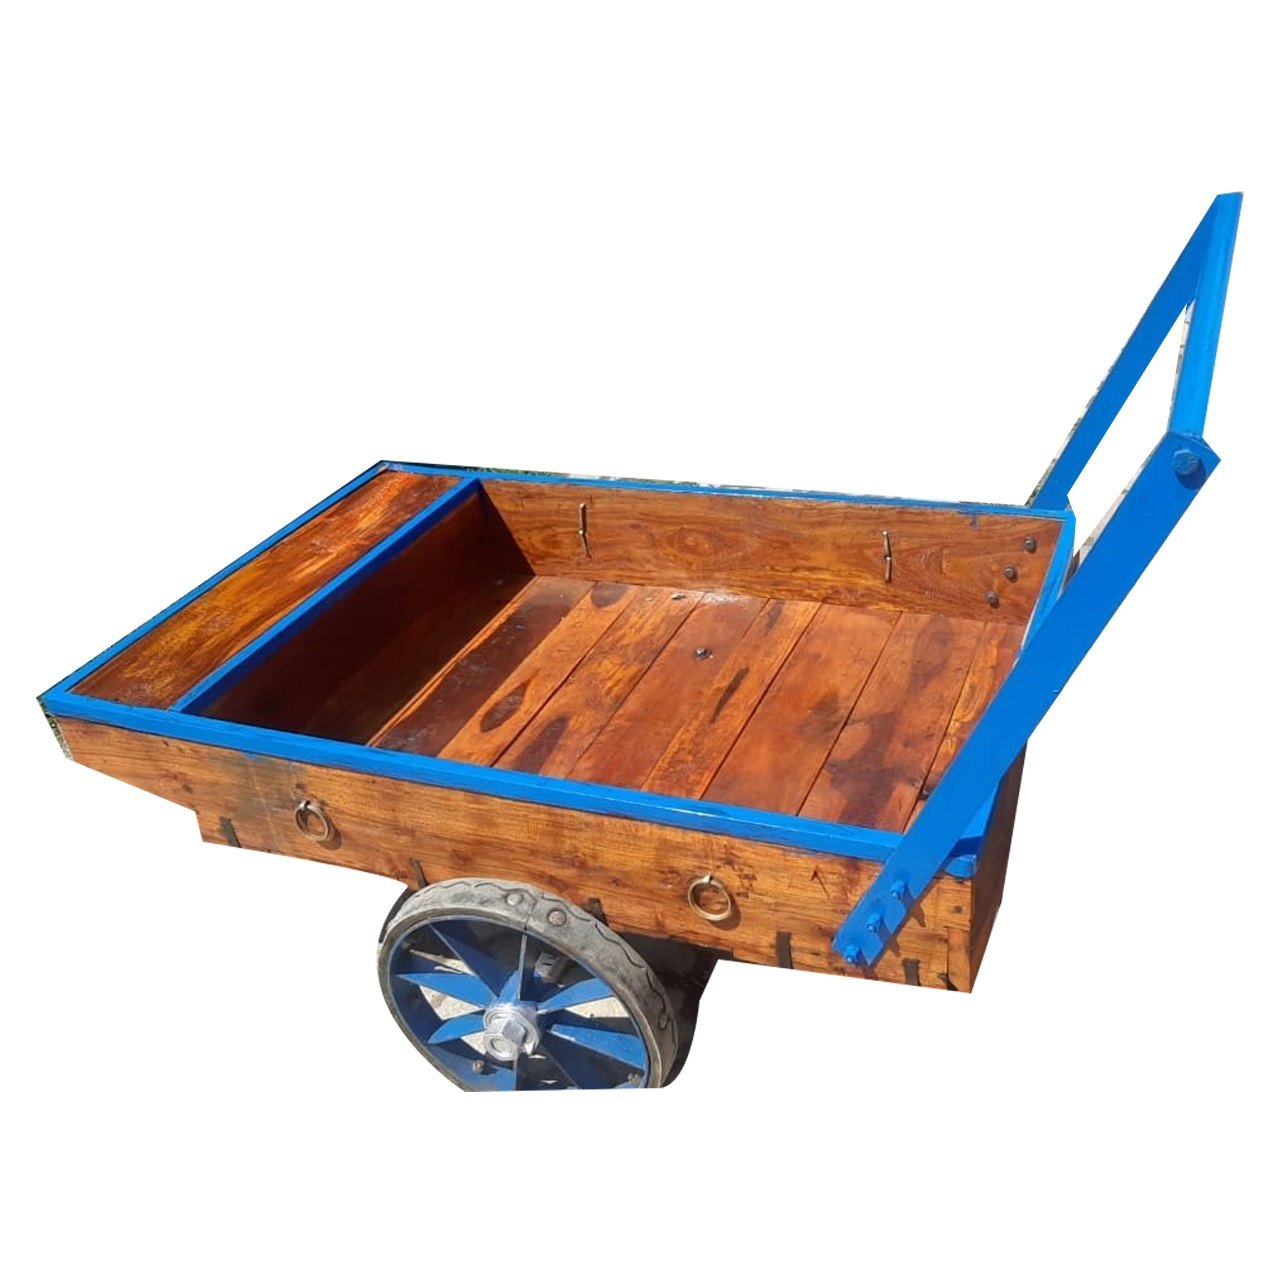 Wooden Carts